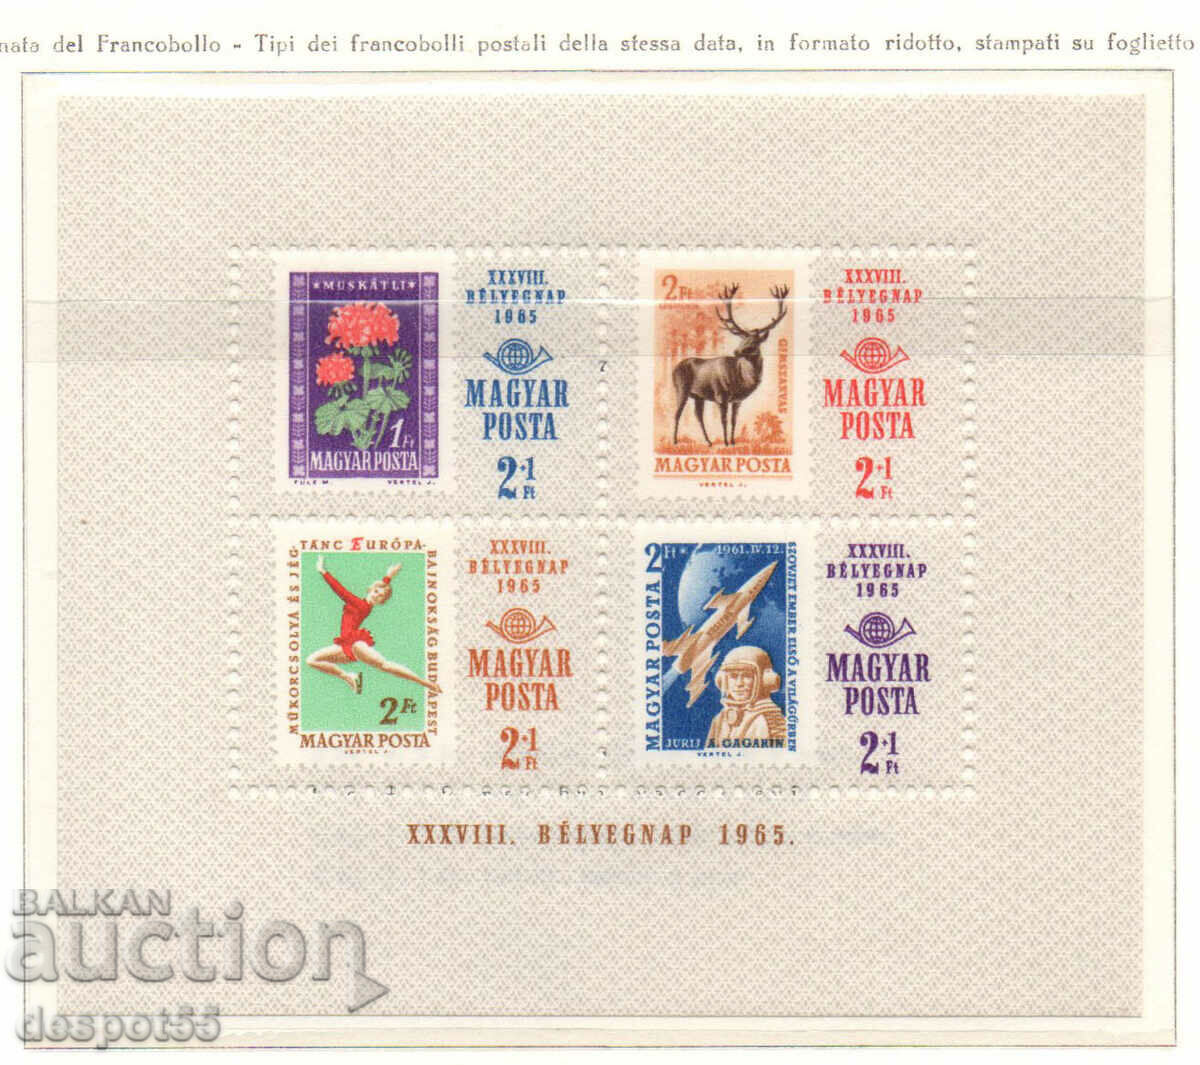 1965. Hungary. Postage stamp day. Block.